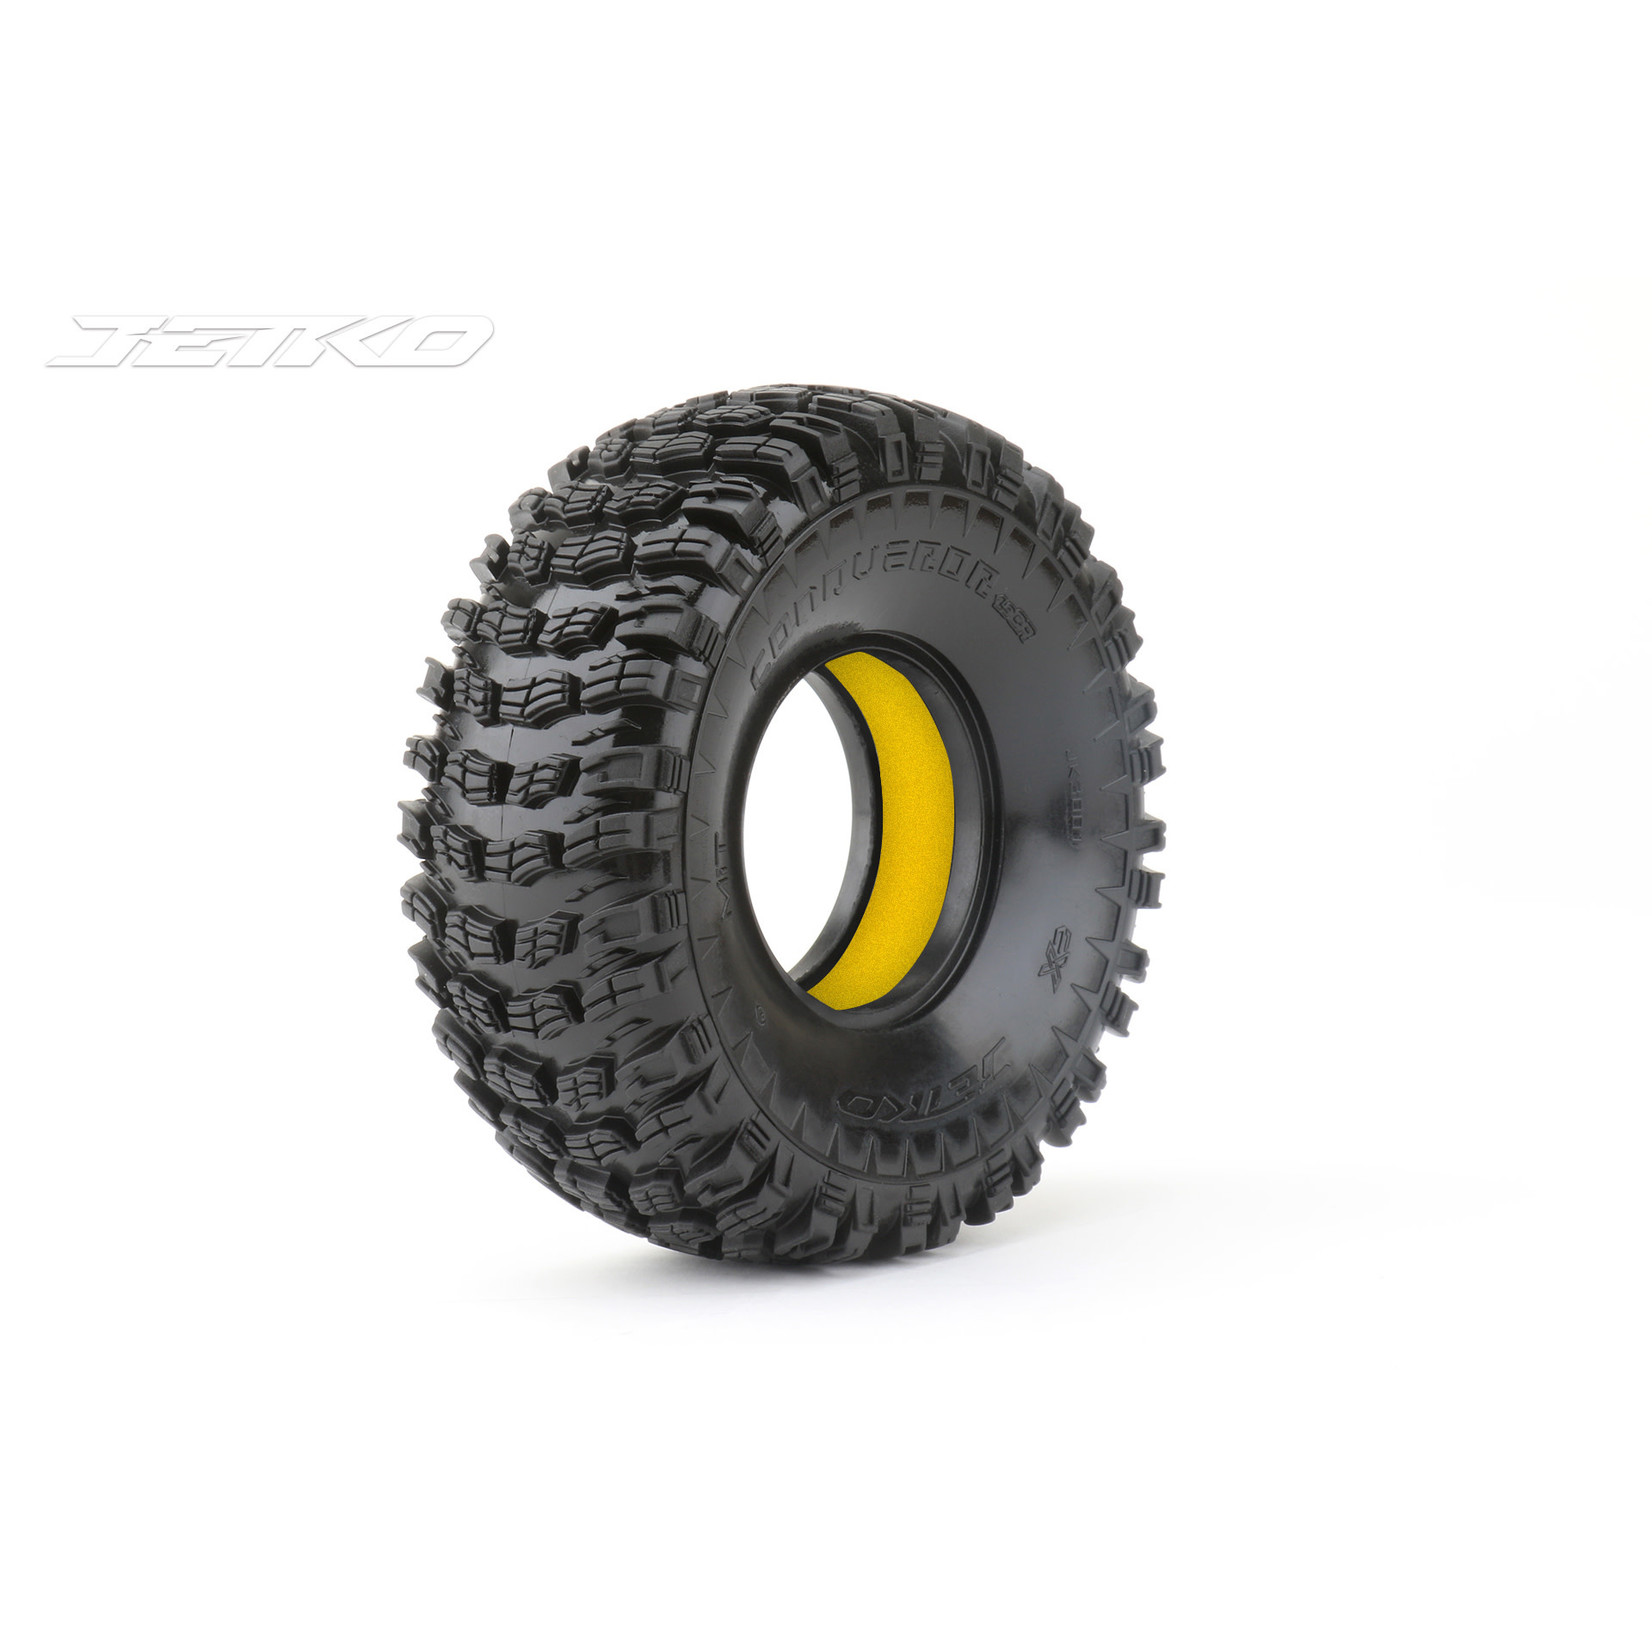 Jetko Tires Jetko Tires 1/10 1.9" Crawler Conqueror Tires, Ultra Soft, Yellow (2) #JKO3001US6212YL